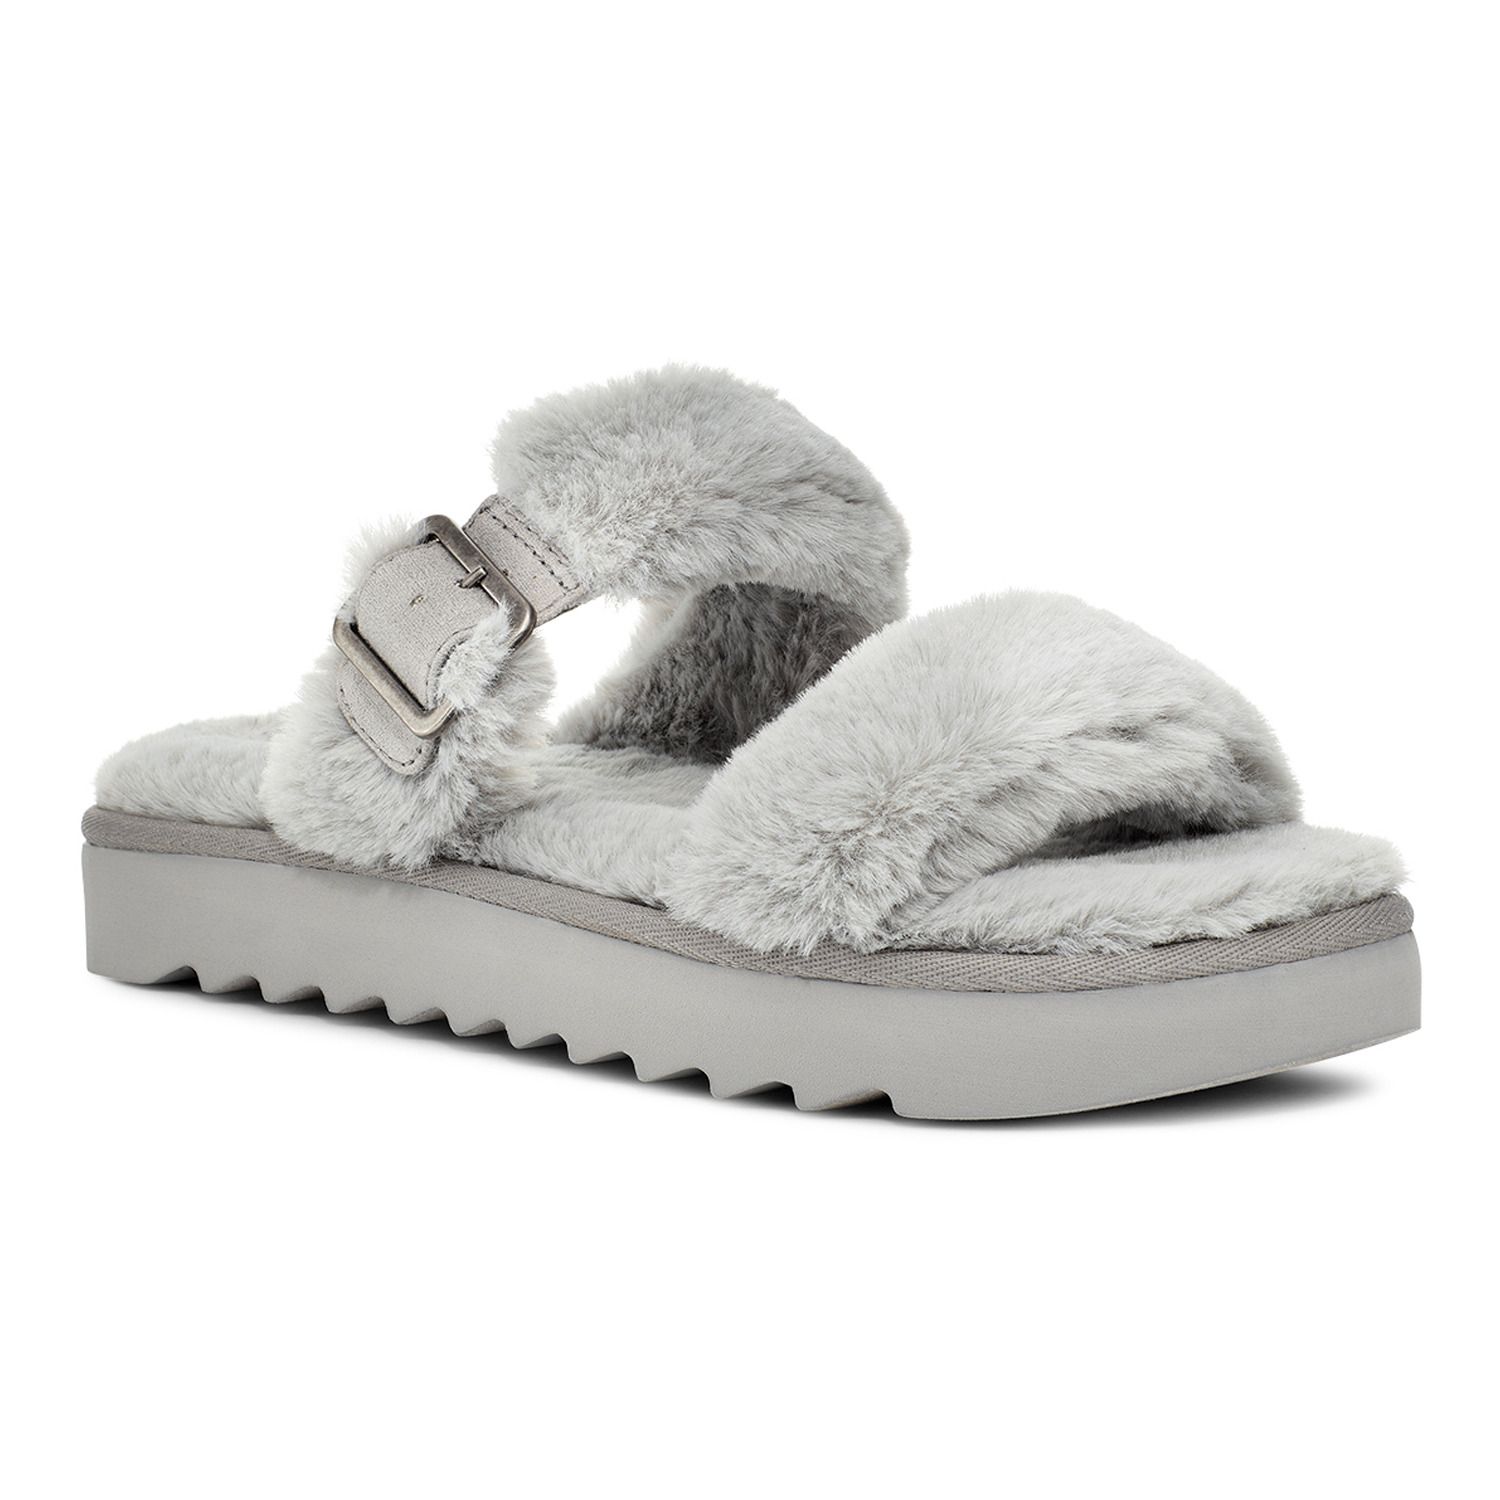 ugg slippers at kohls online -